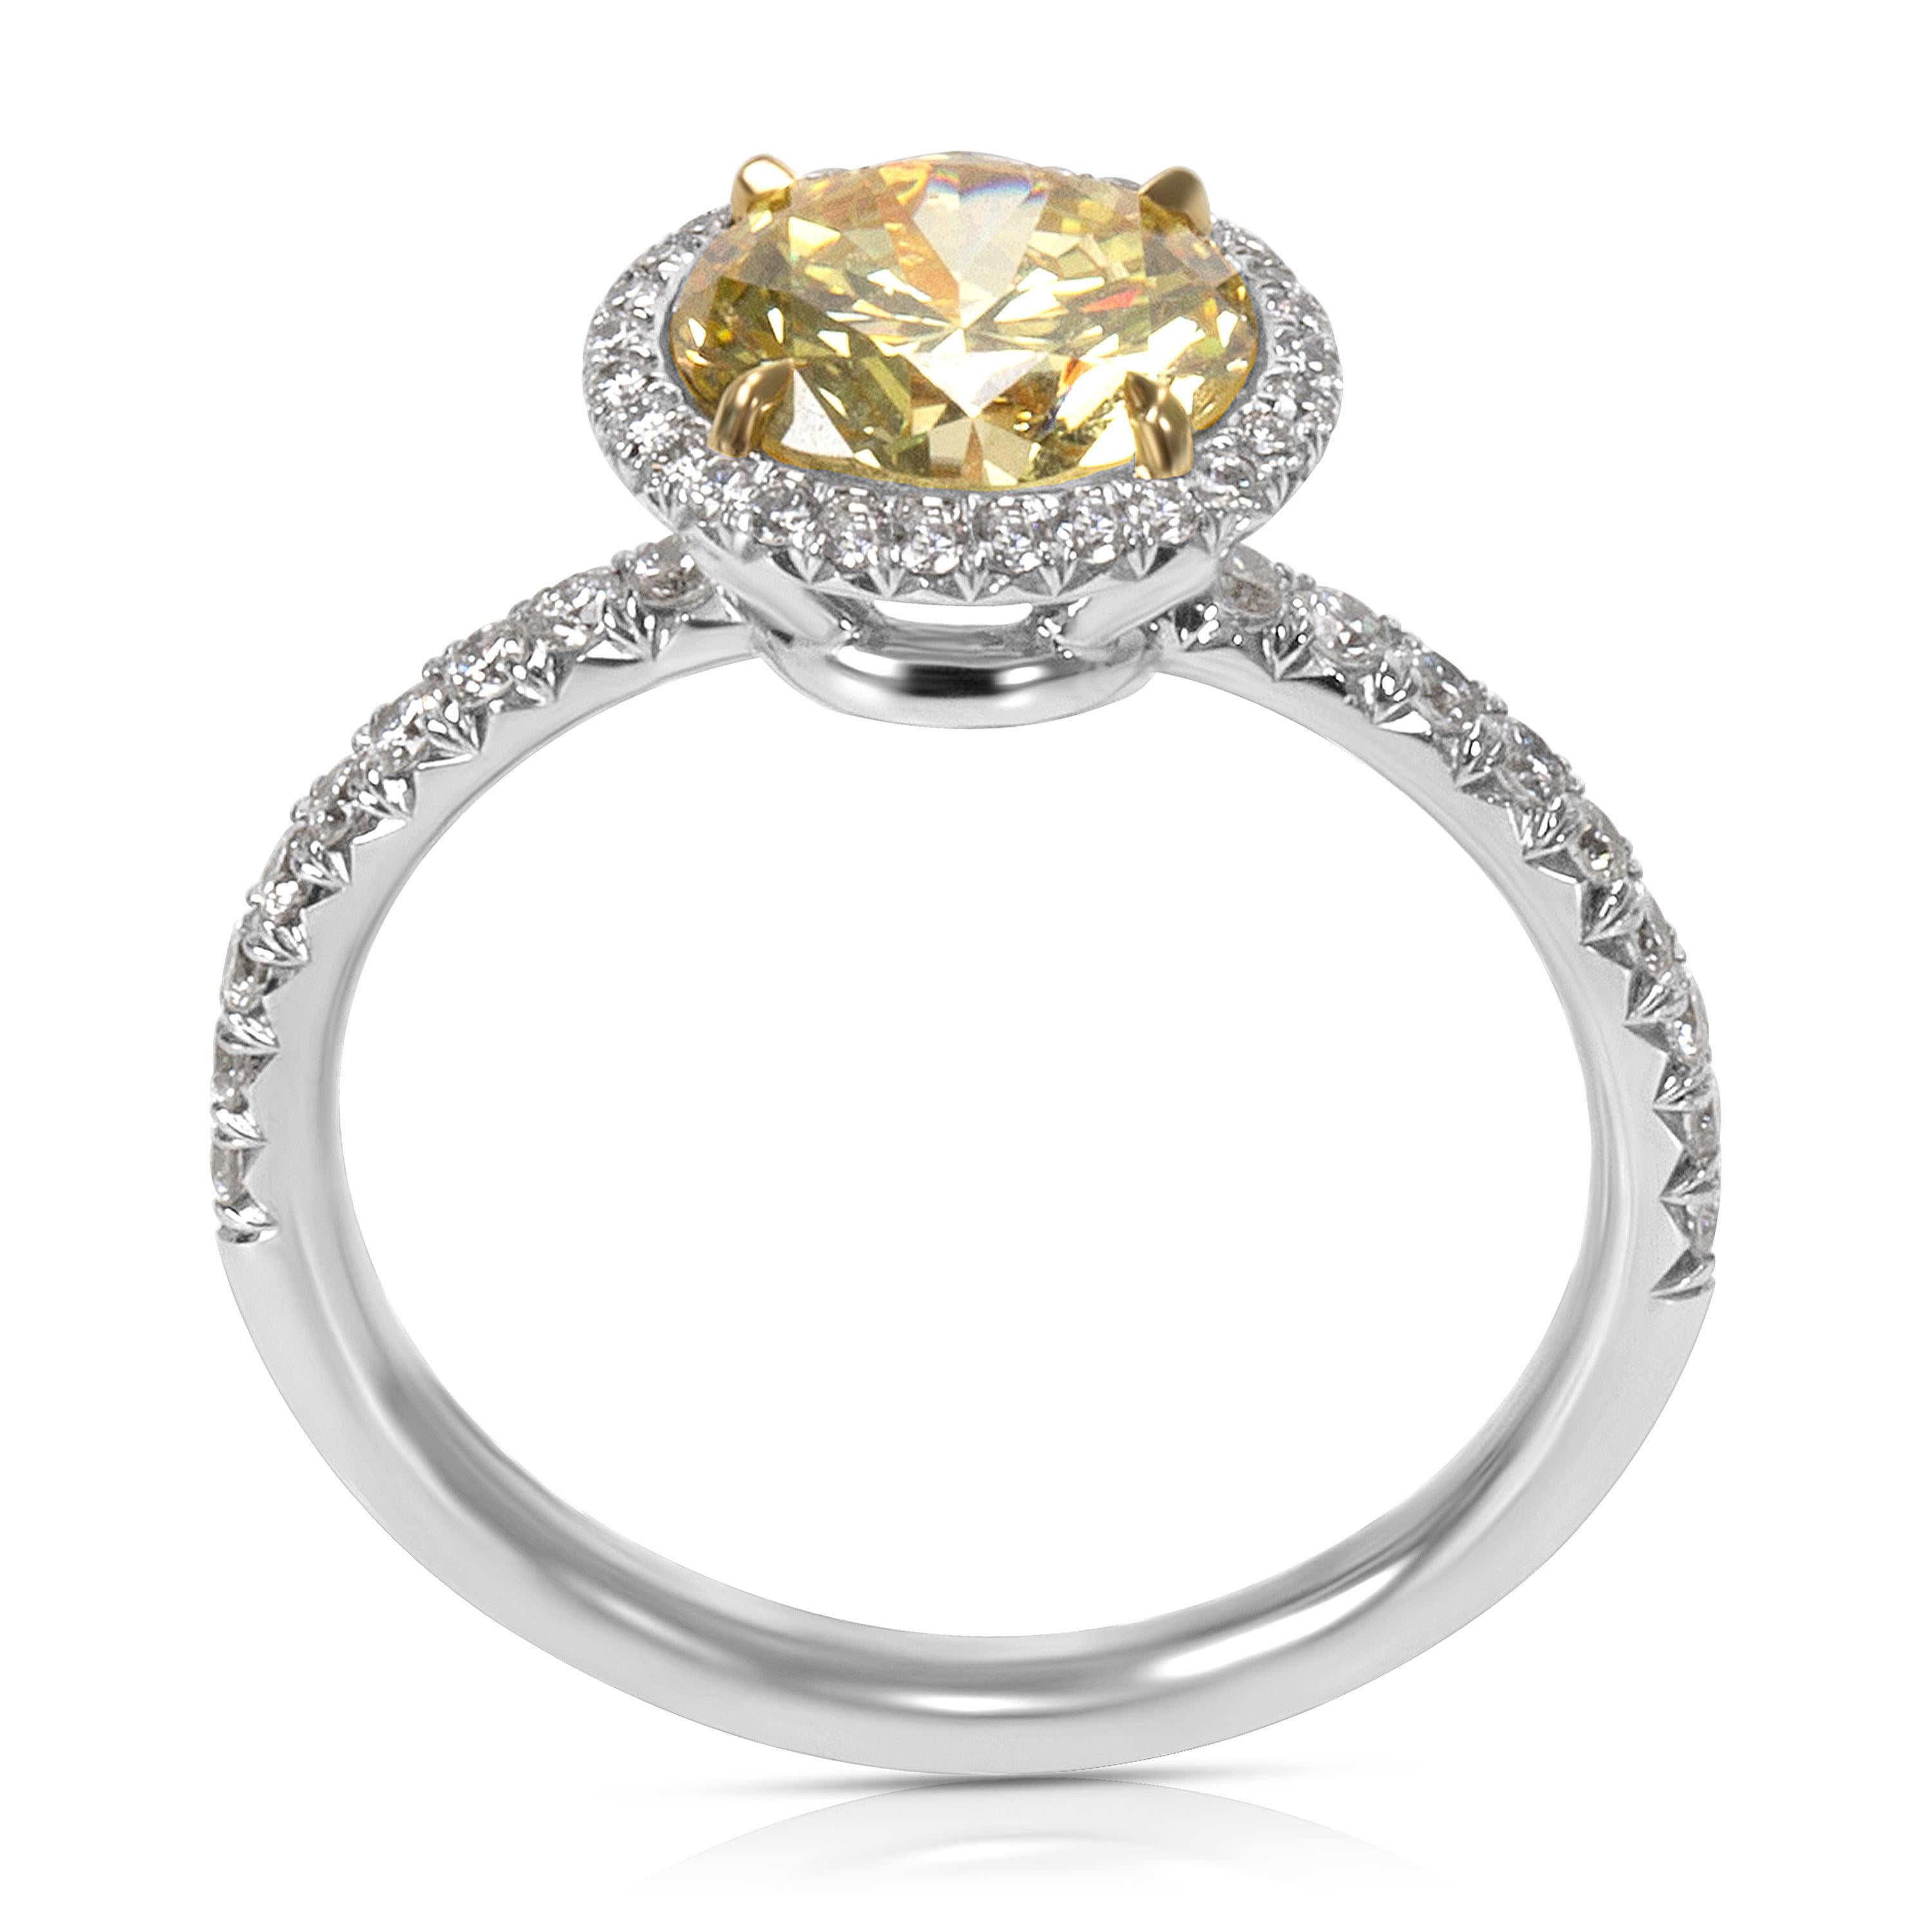 Round Cut GIA Fancy Intense Yellow Diamond Engagement Ring in 18k Gold & Plat 1.87 CTW